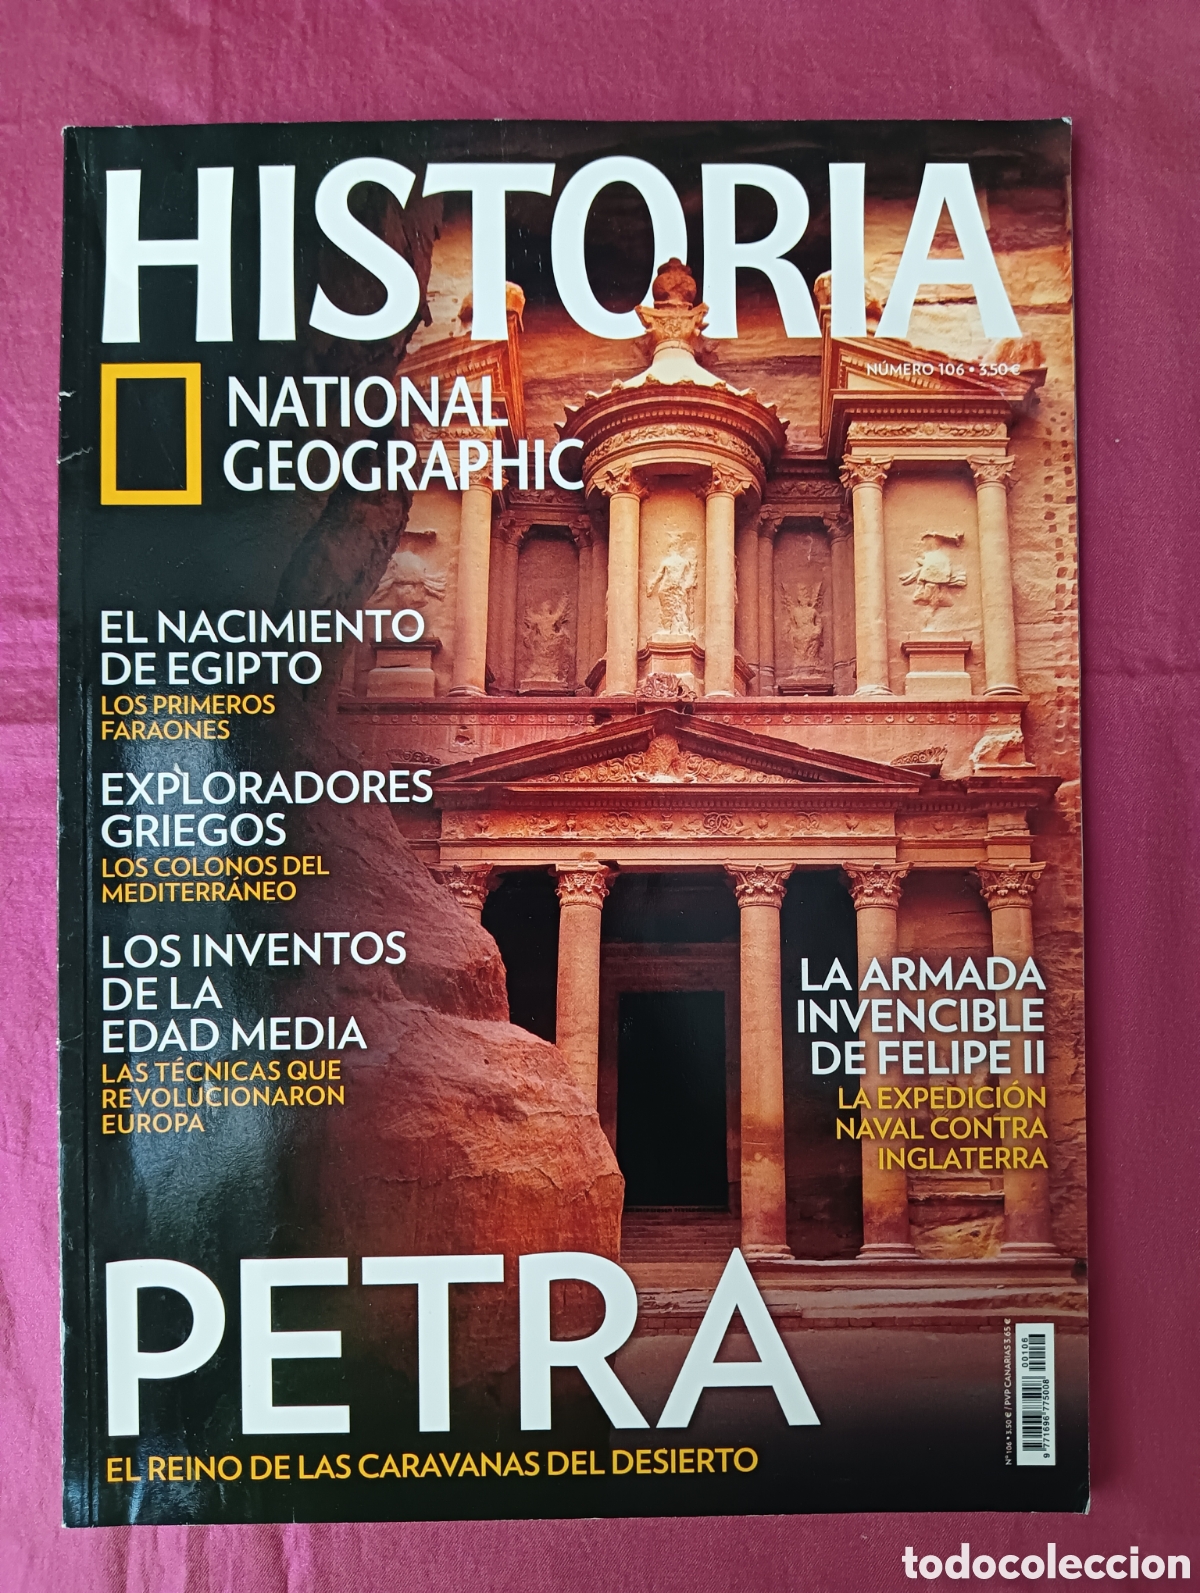 lucha Calor miércoles historia national geographic n°106 - petra el r - Buy Magazine: National  Geographic on todocoleccion